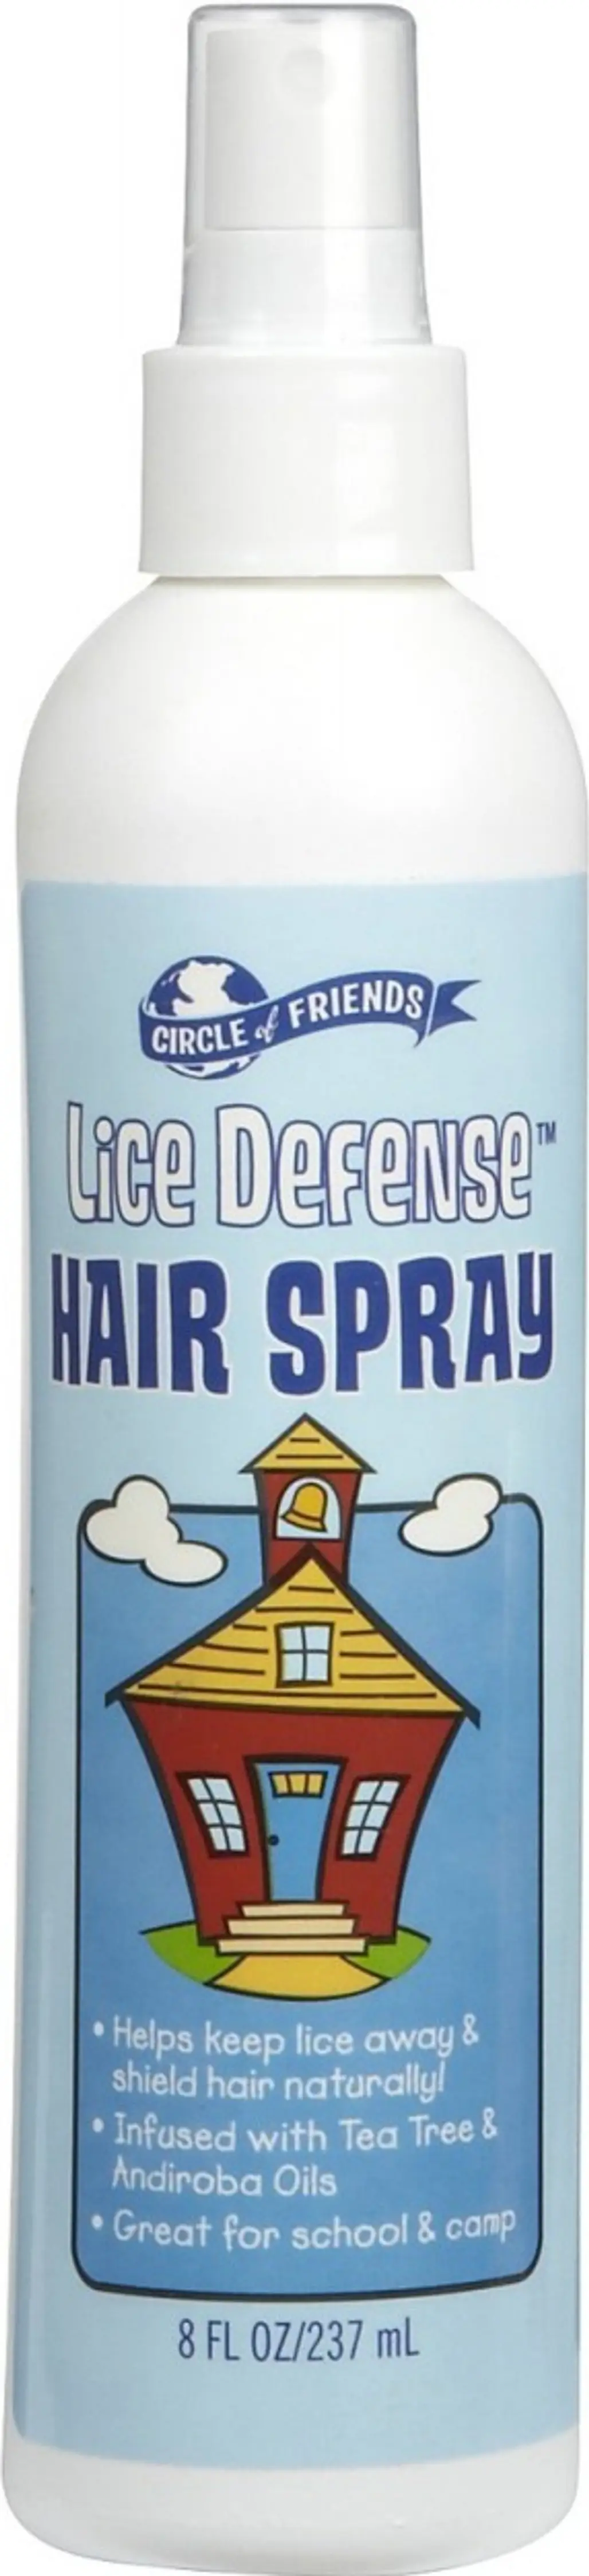 Circle of Friends Lice Defense Hair Spray